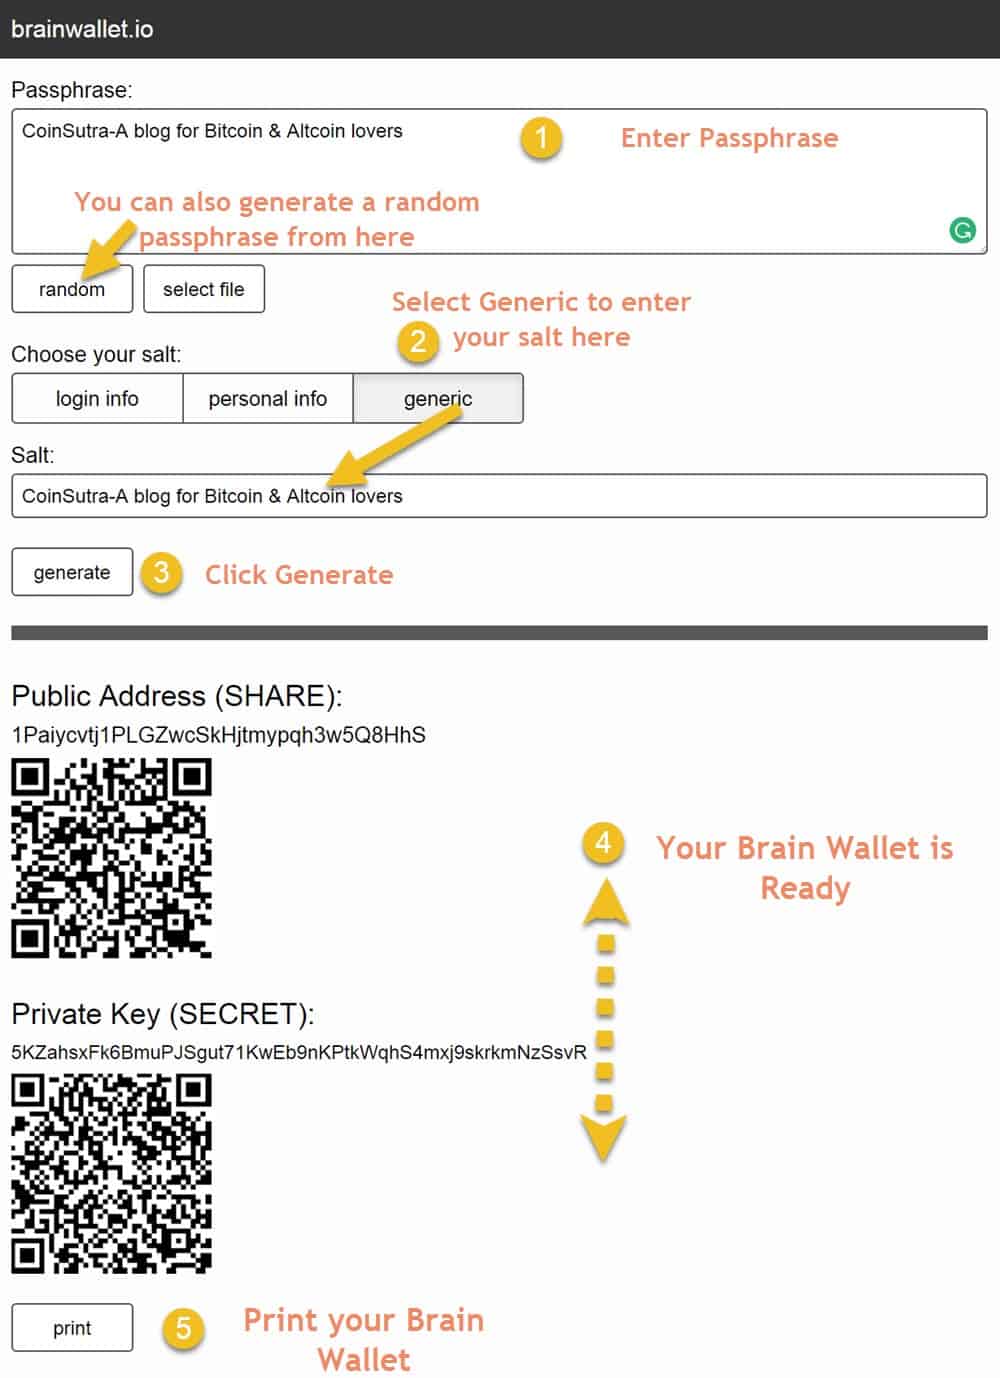 Brain wallet random picker for Bitcoin, Bitcoin Cash and Bitcoin Gold addresses